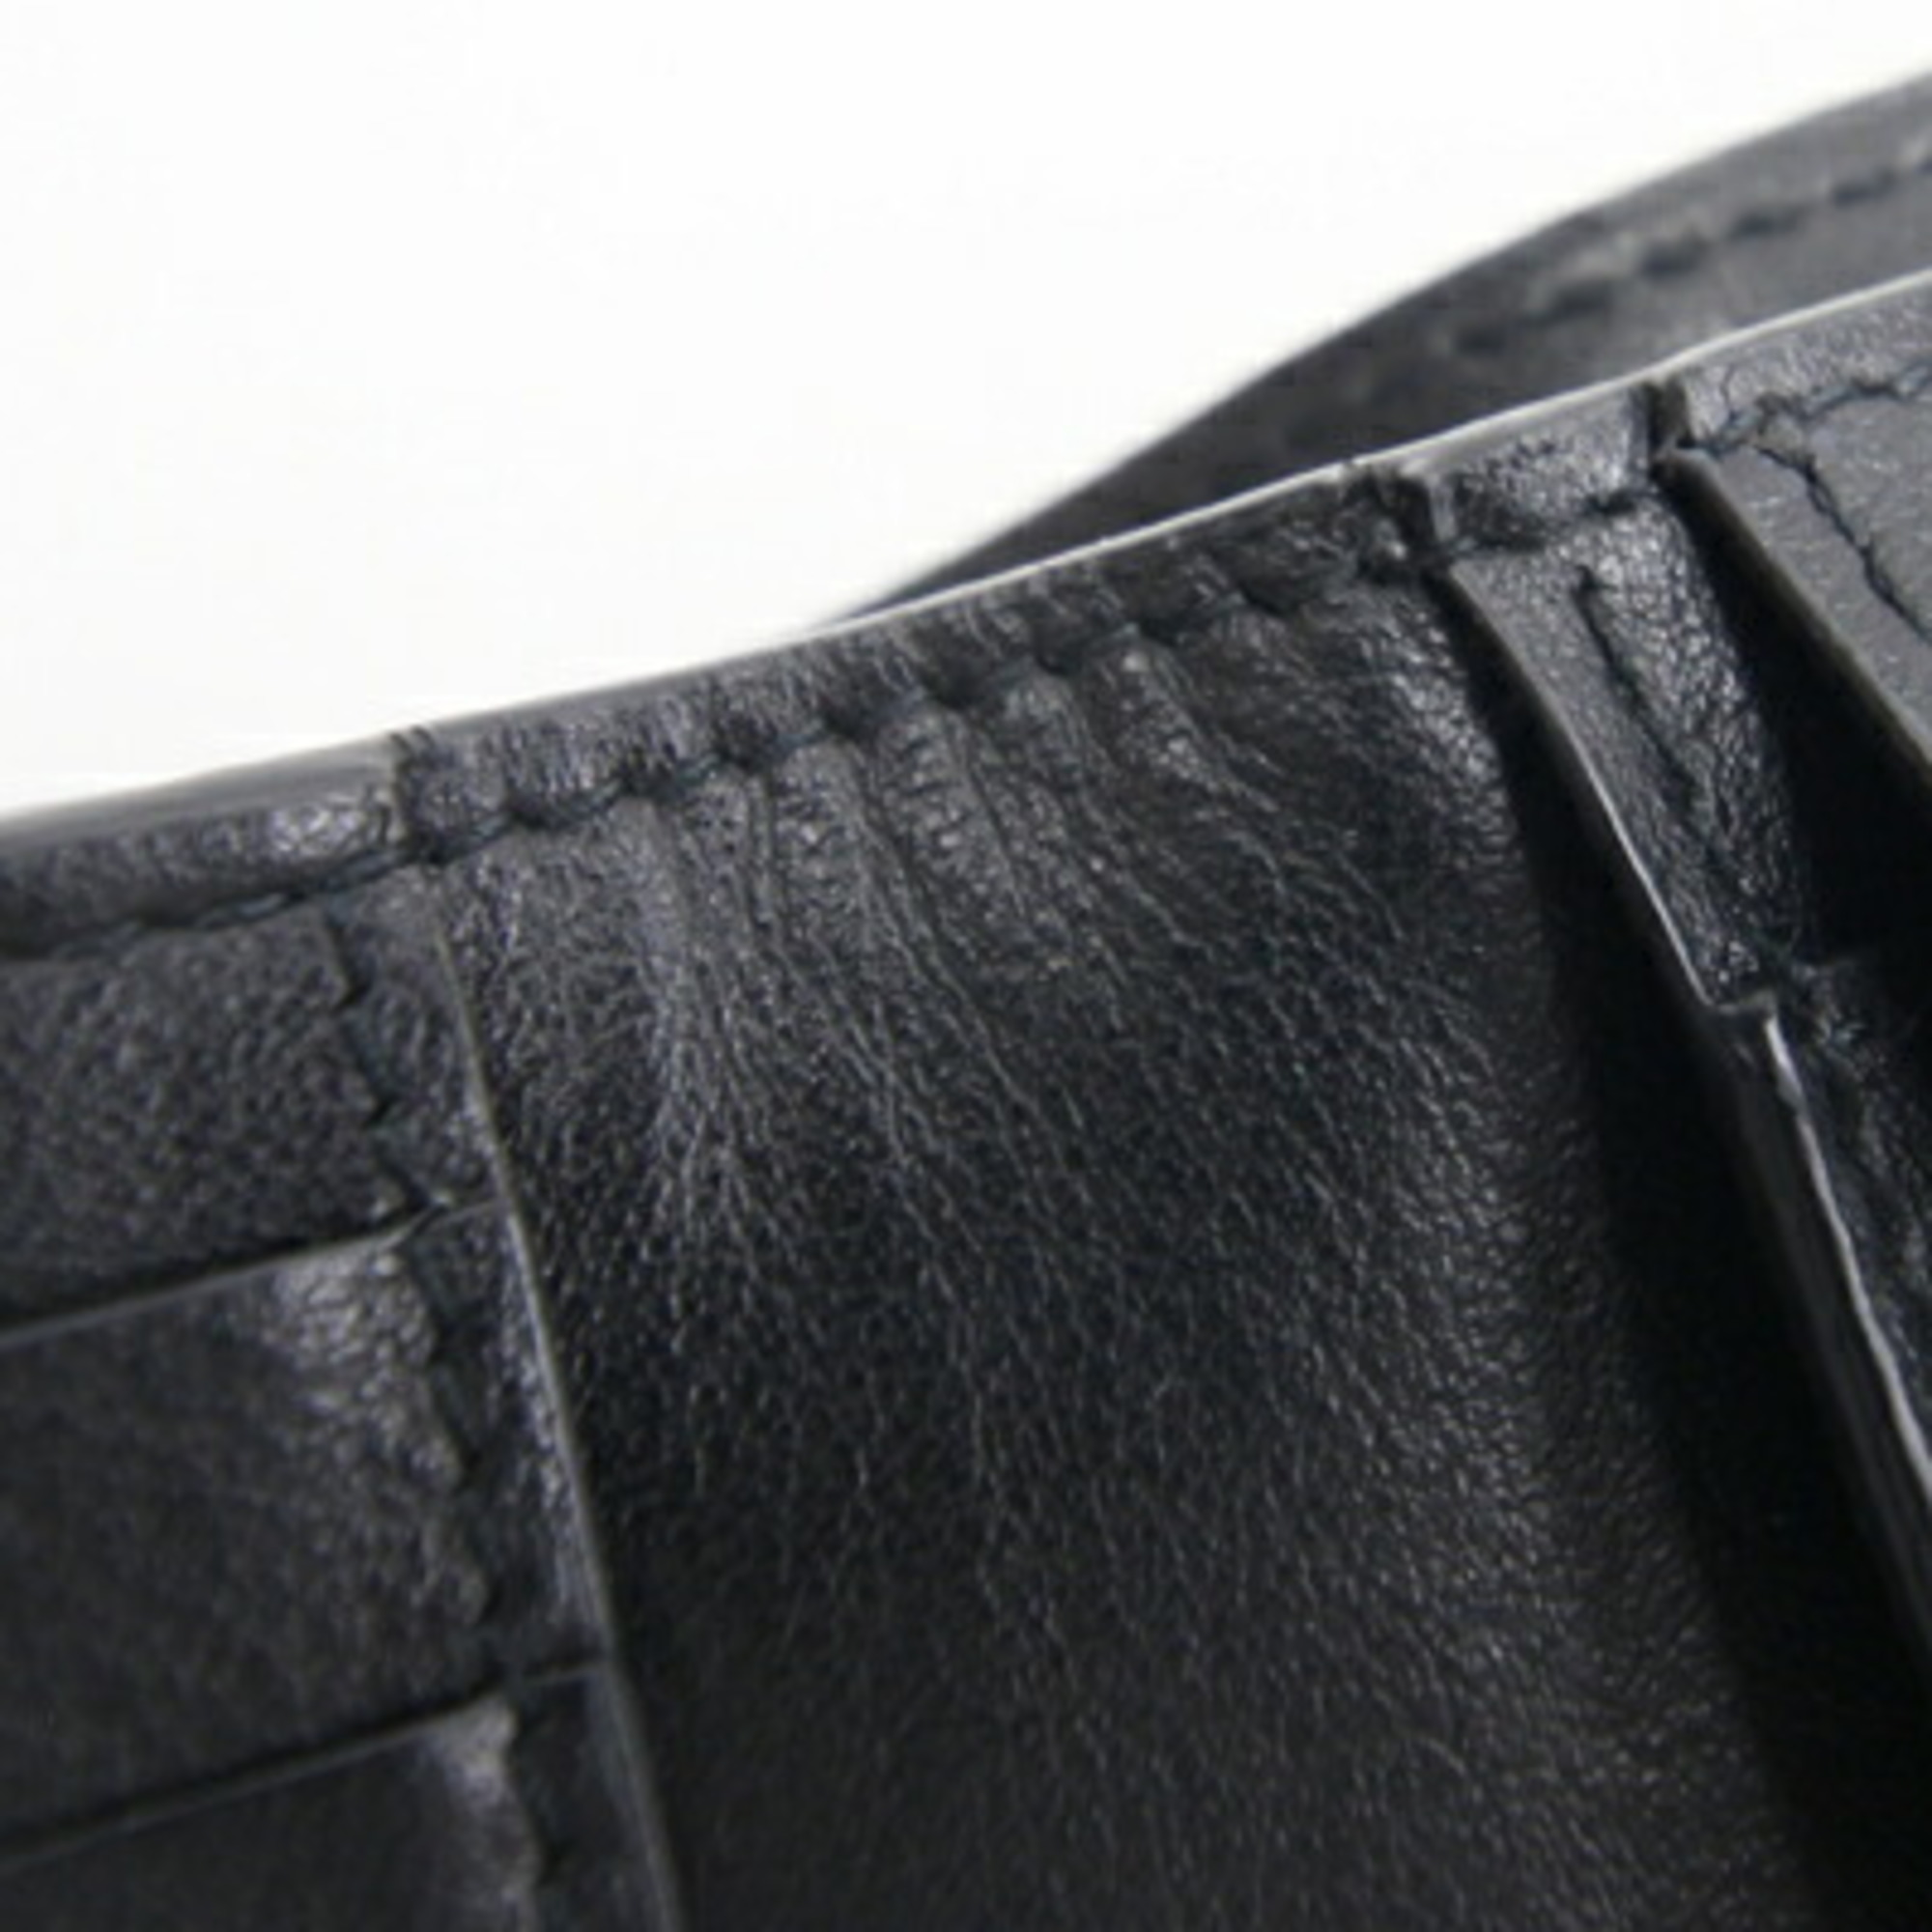 Bottega Veneta Bifold Wallet Devos Intrecciato 605722 Black Leather Compact Men's BOTTEGA VENETA